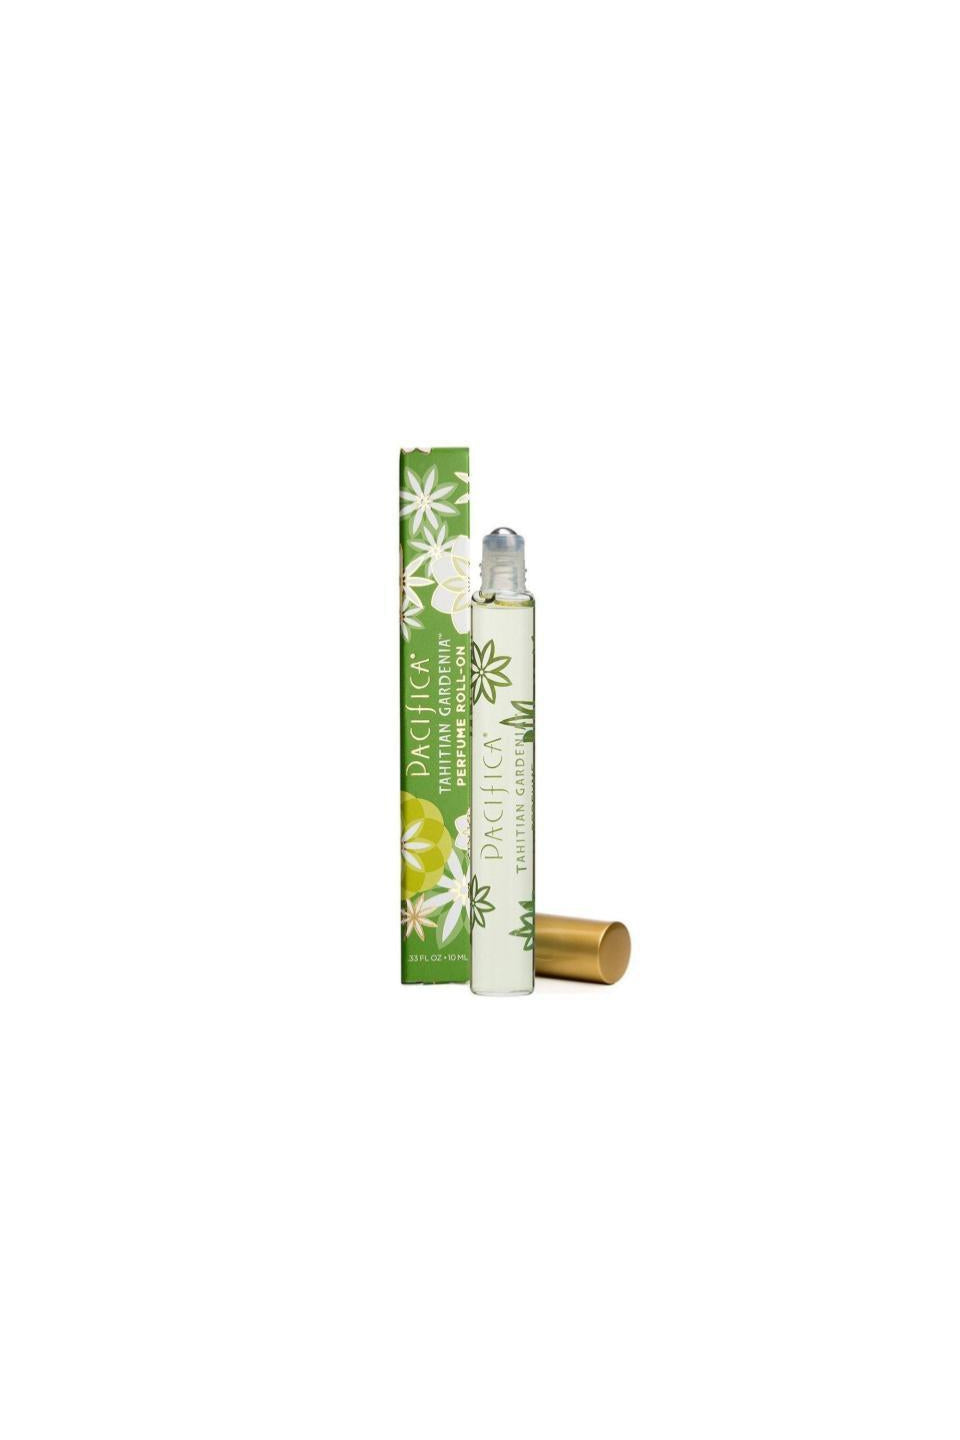 Pacifica Tahitian Garden Roll-On Perfume 10ml